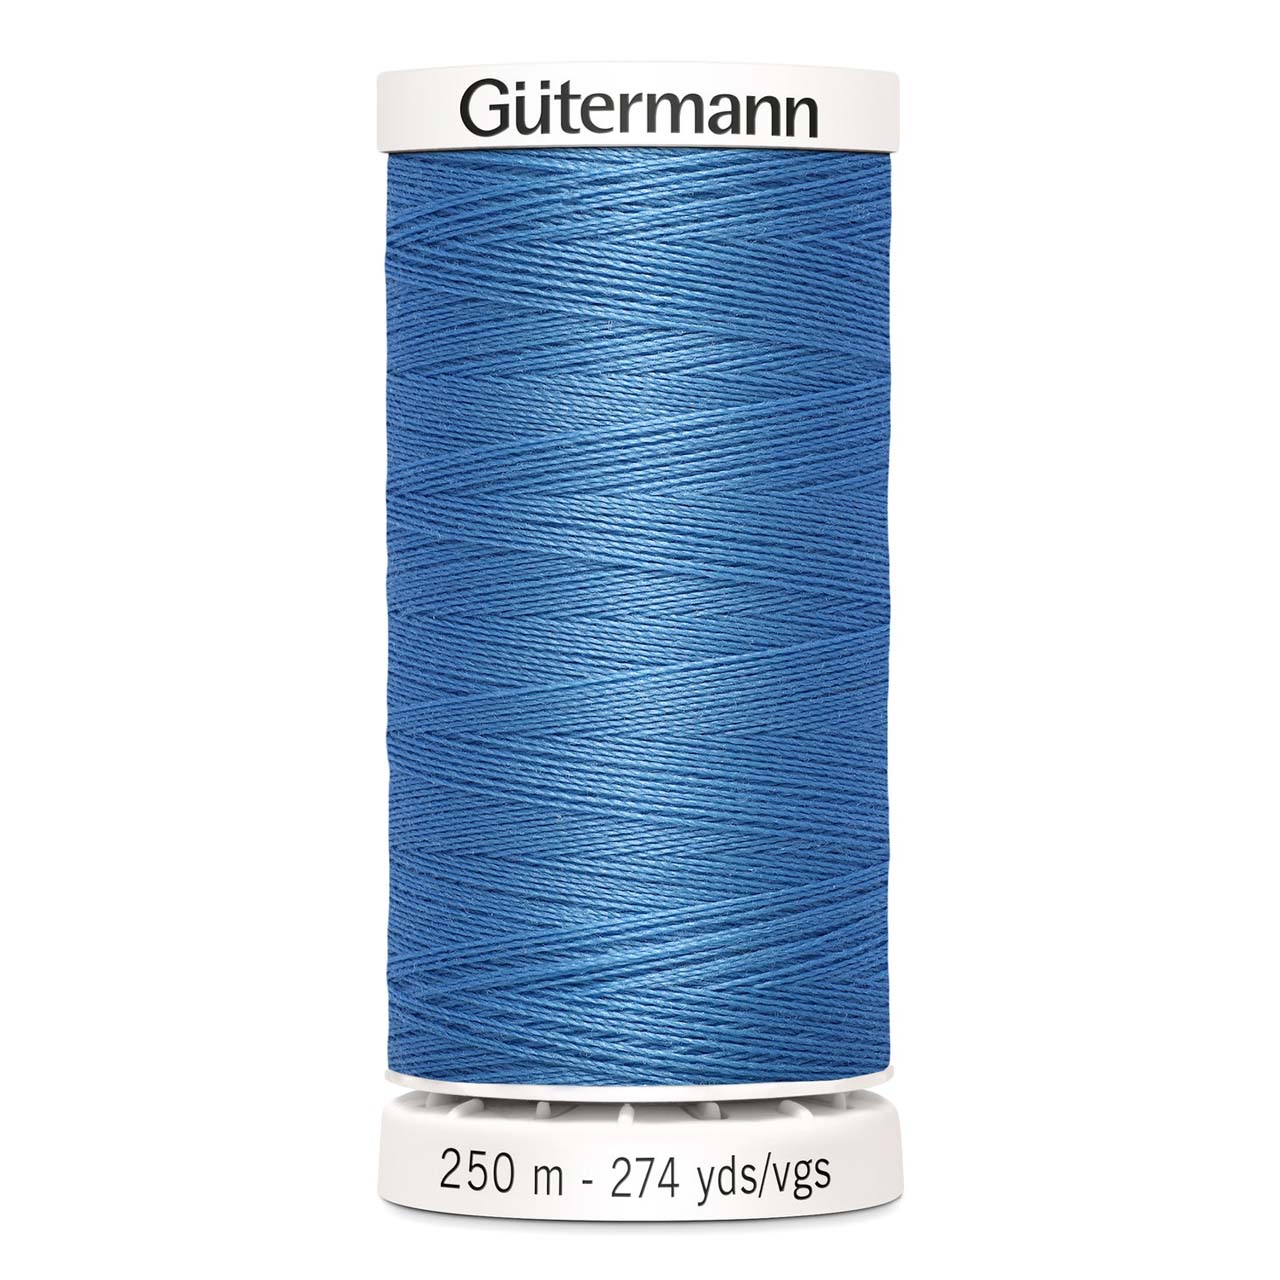 Gutermann thread 965 sewing thread 250 metres